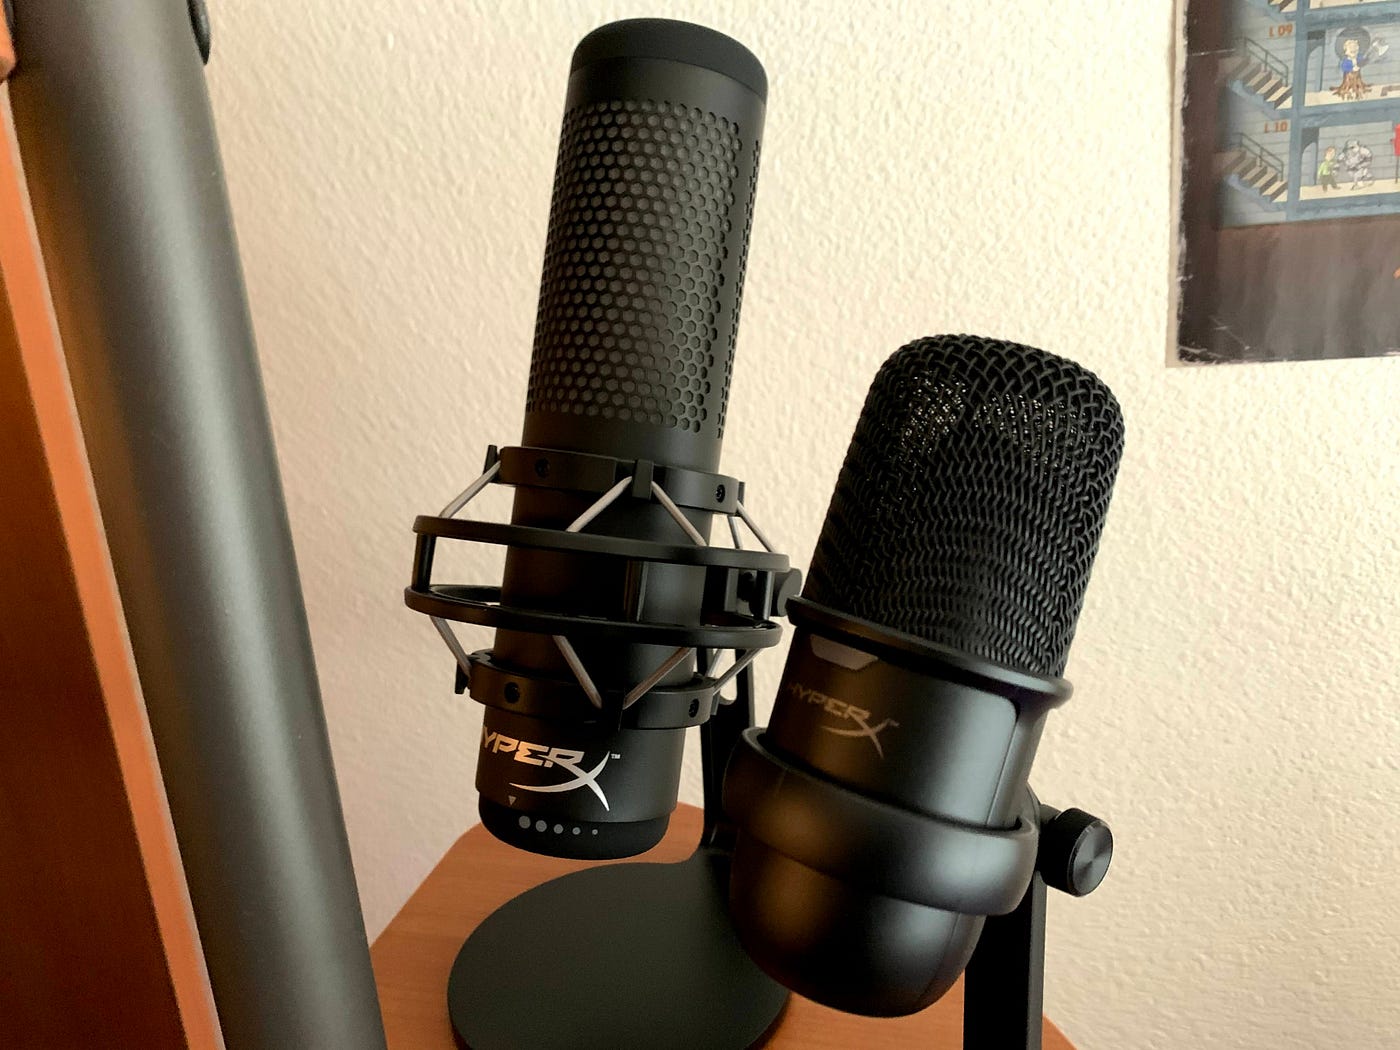 HyperX SoloCast Microphone Review | by Alex Rowe | Medium